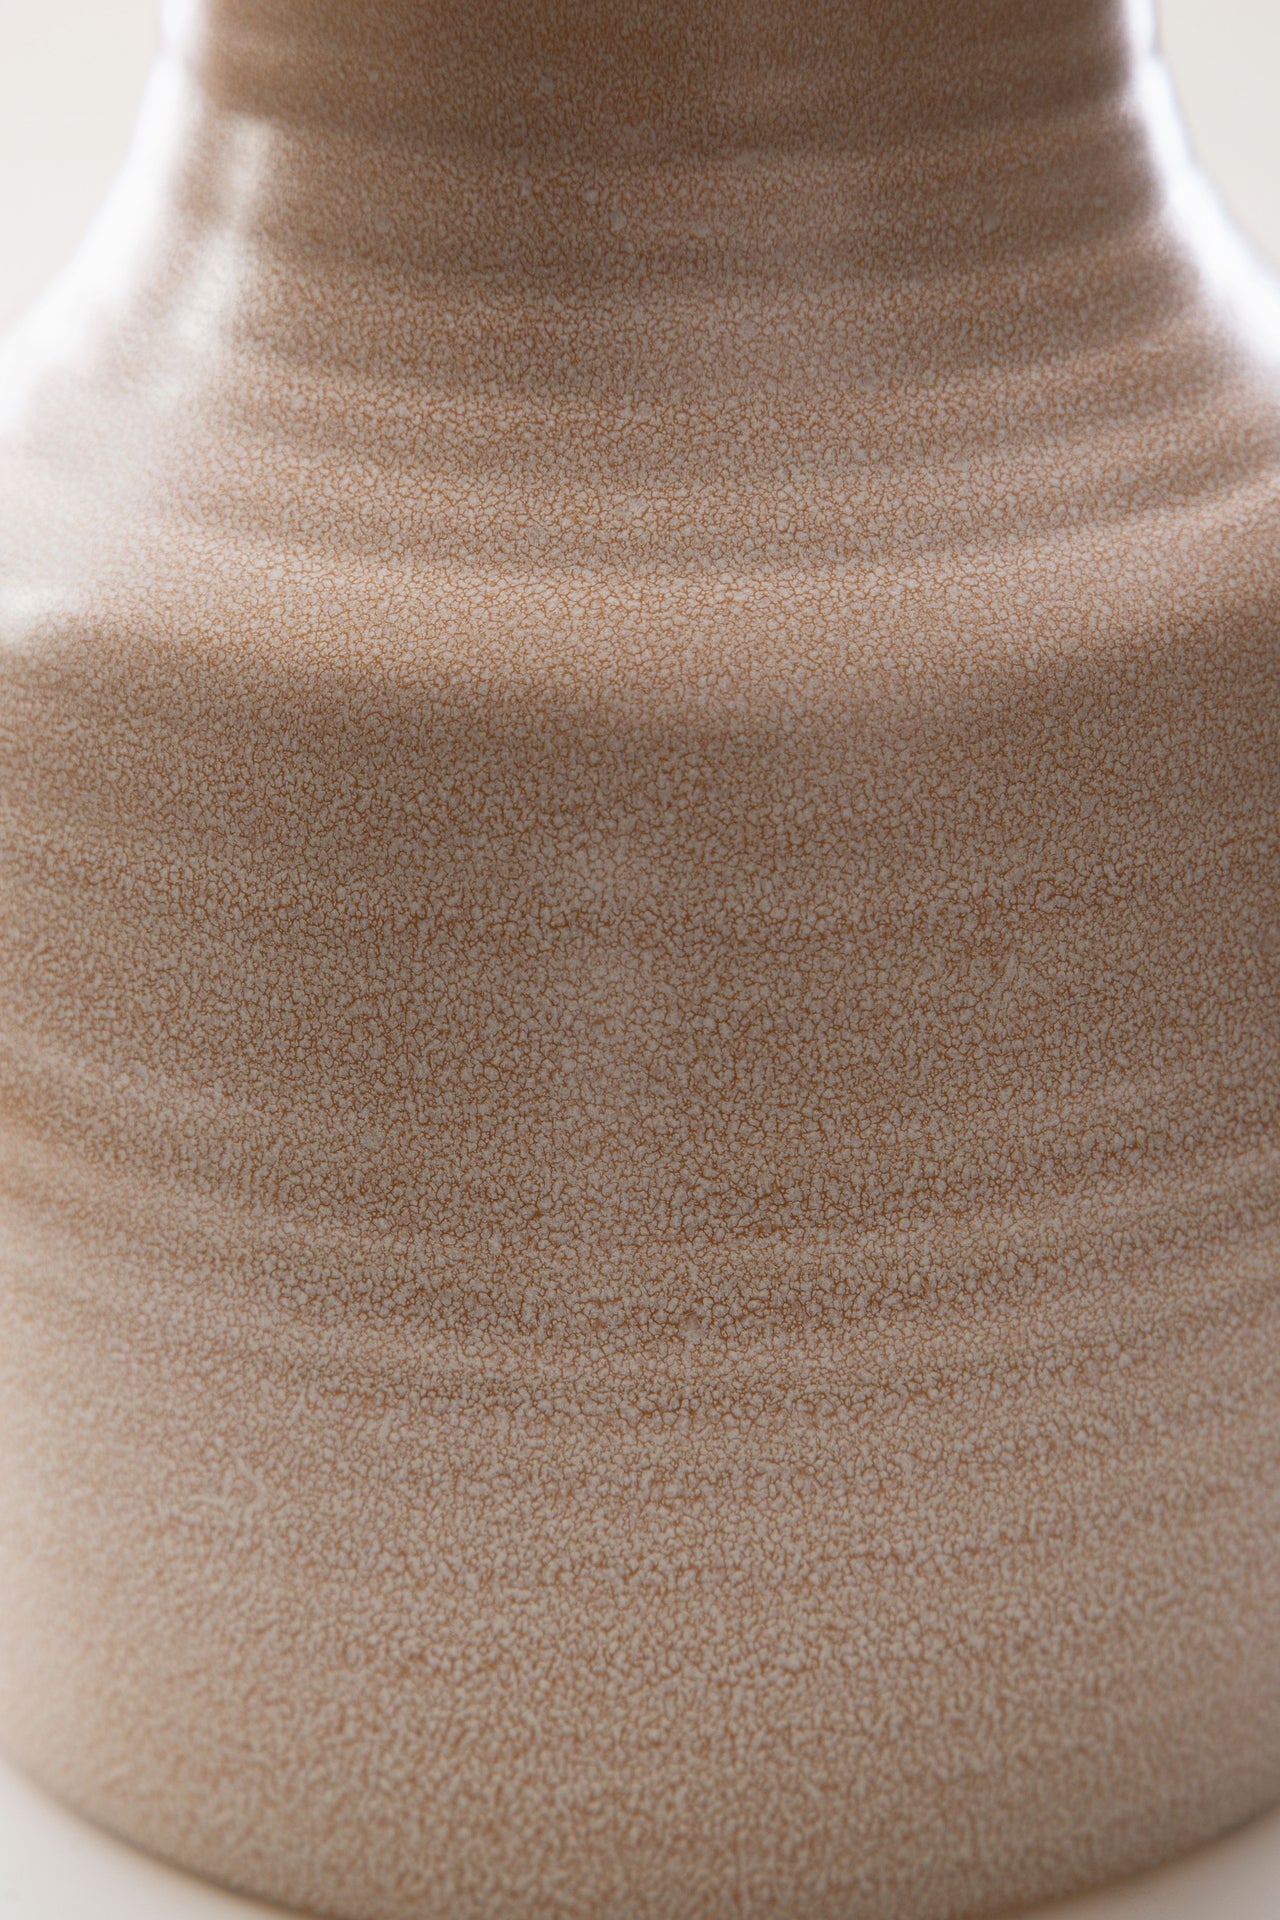 Millcott - Medium Vase - Tony's Home Furnishings